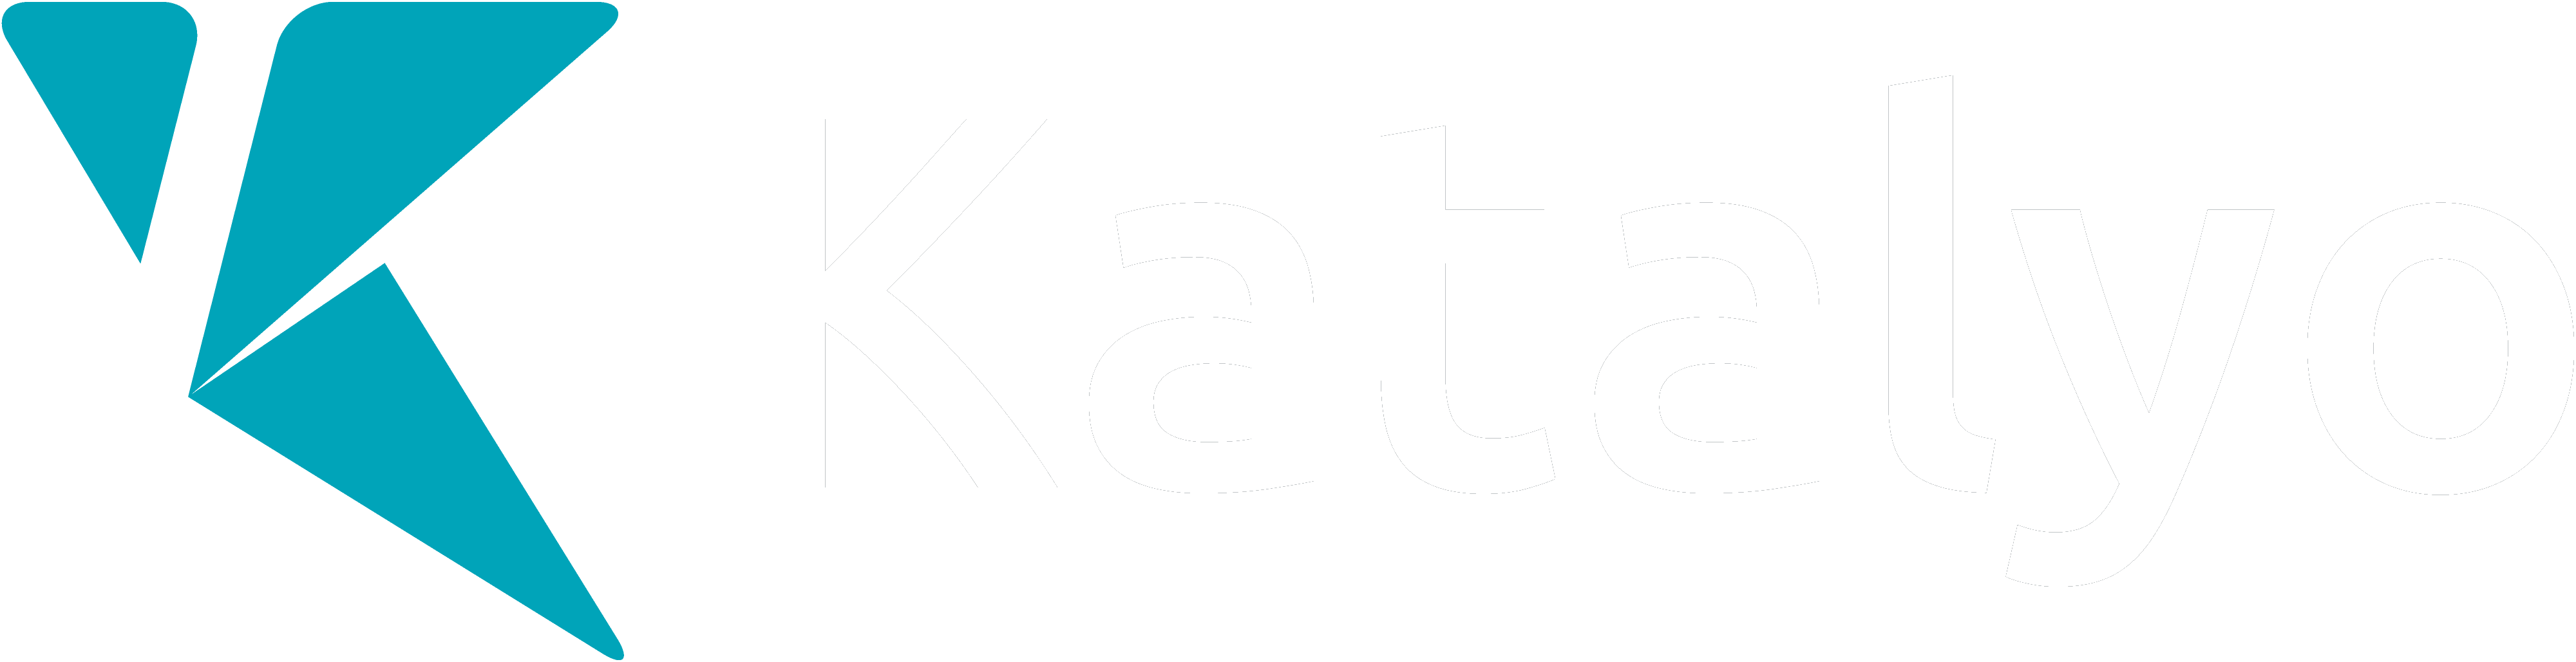 katalyo logo